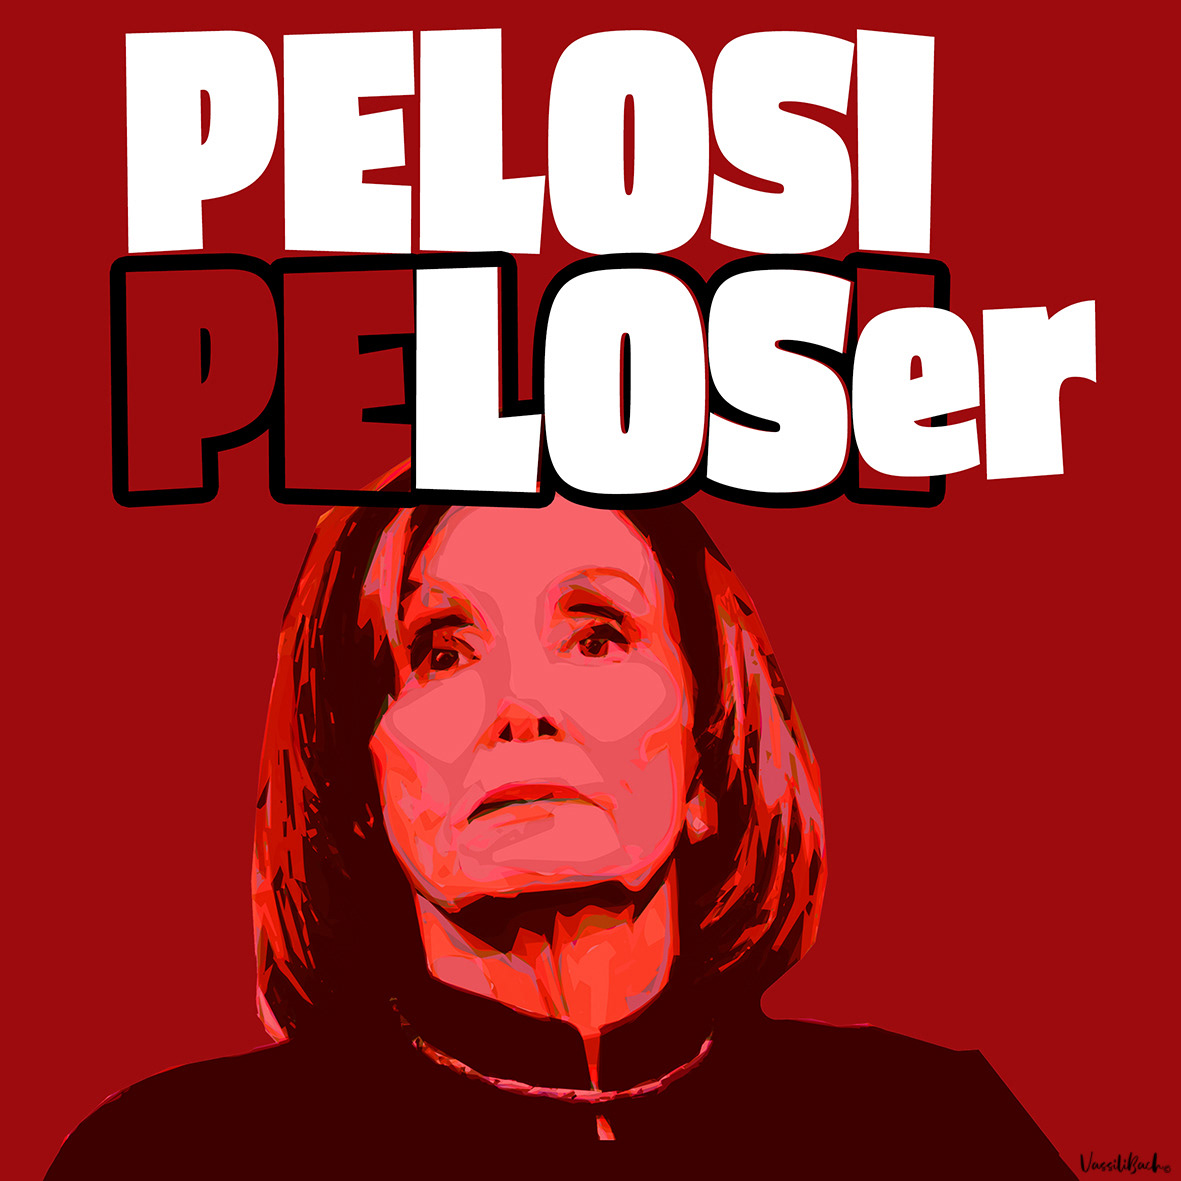 Nancy Pelosi Temper Tantrum 2020 impeachment 2020 election political politics usa democrats